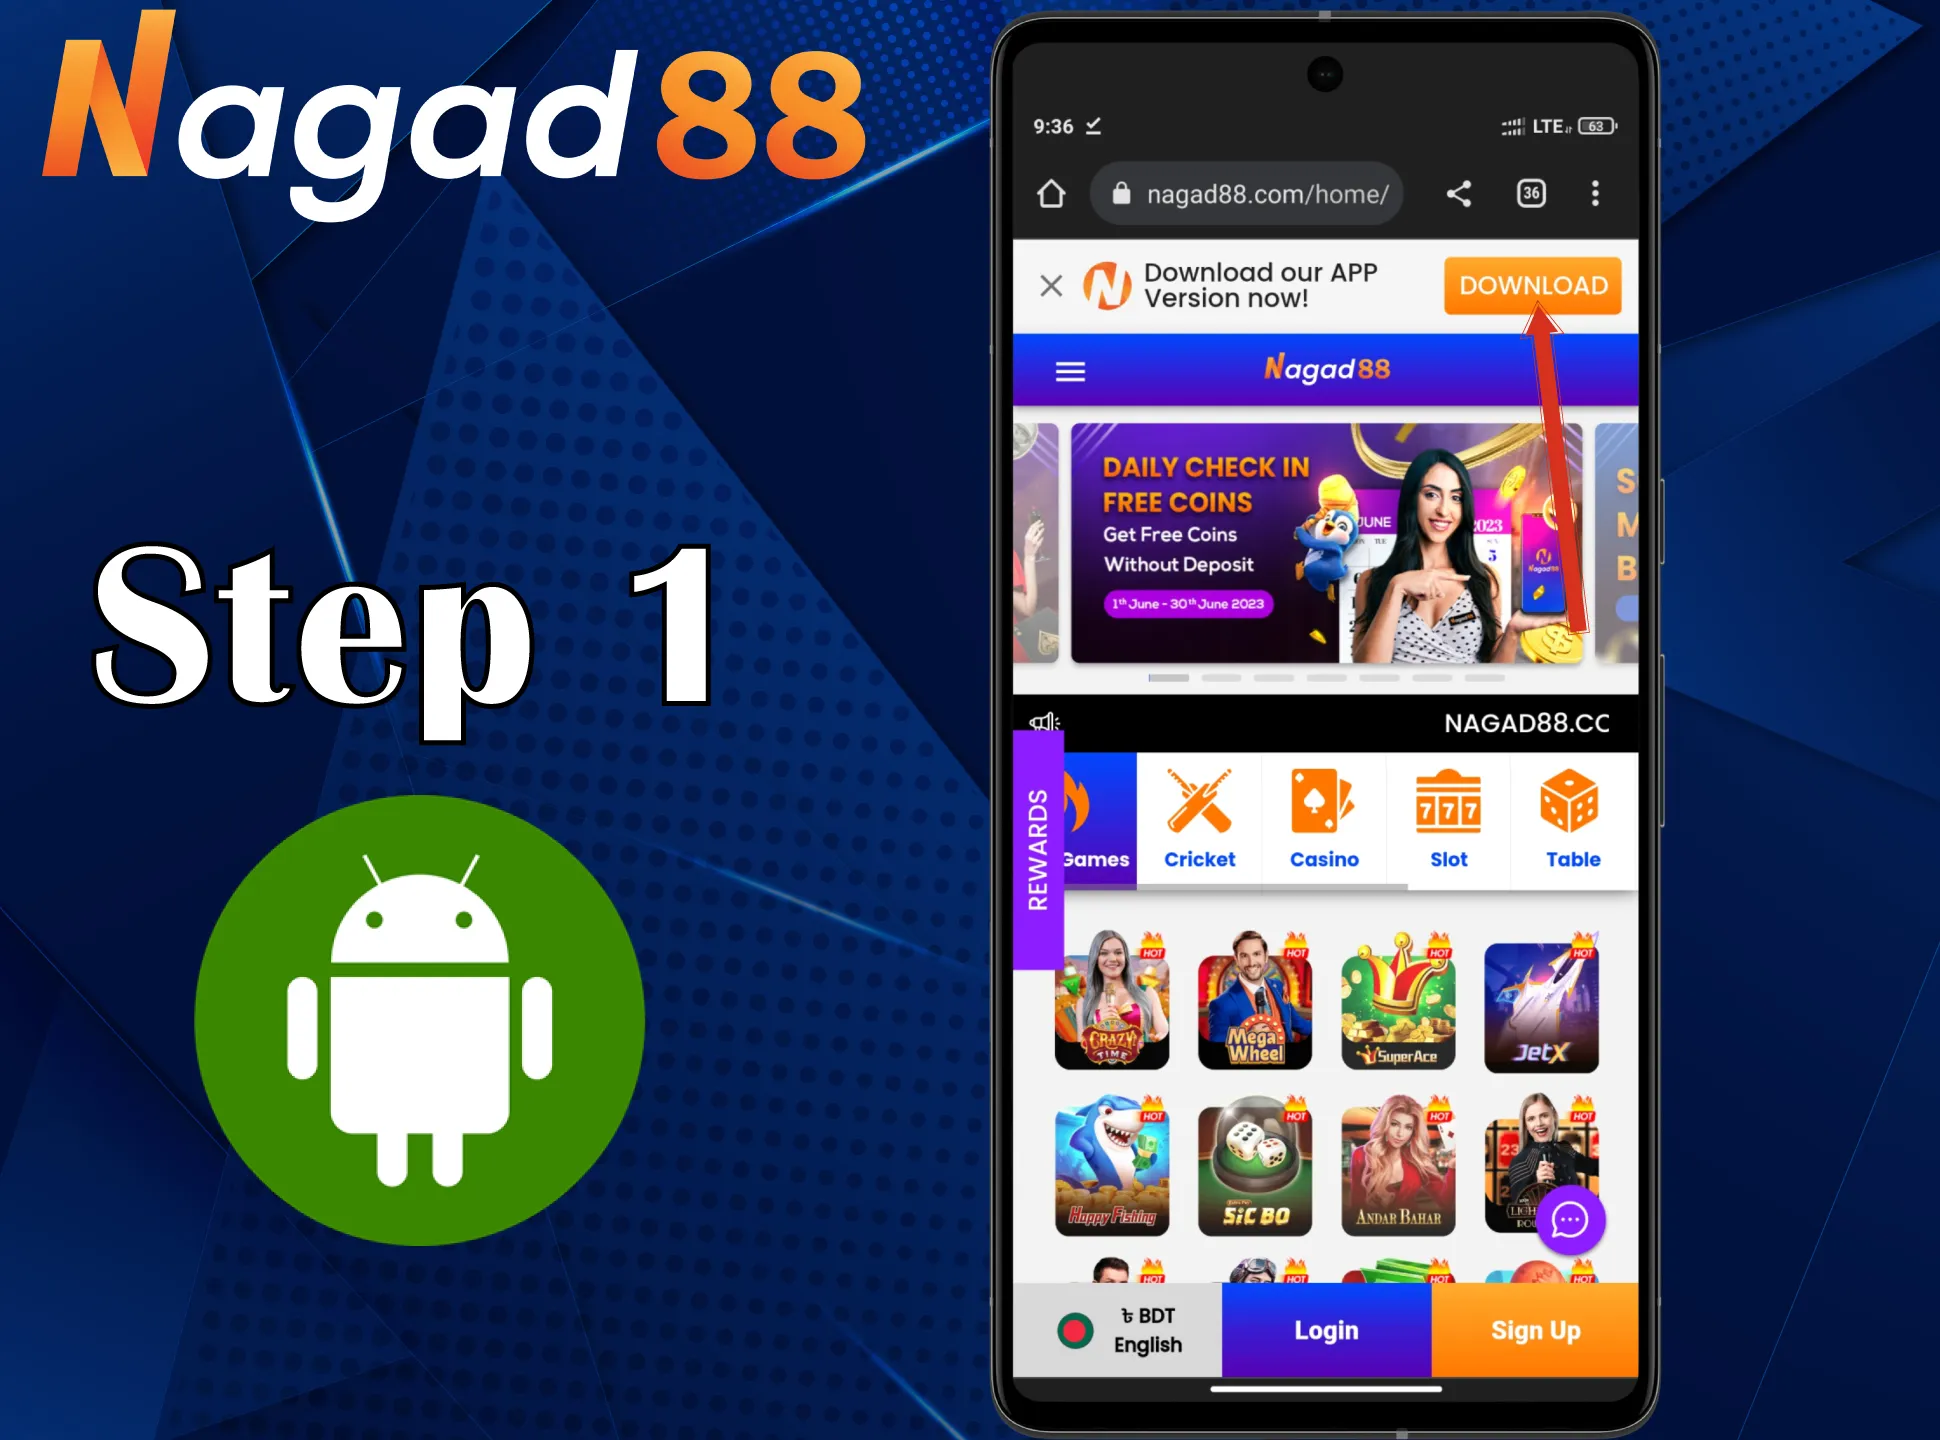 Download the Nagad88 app.